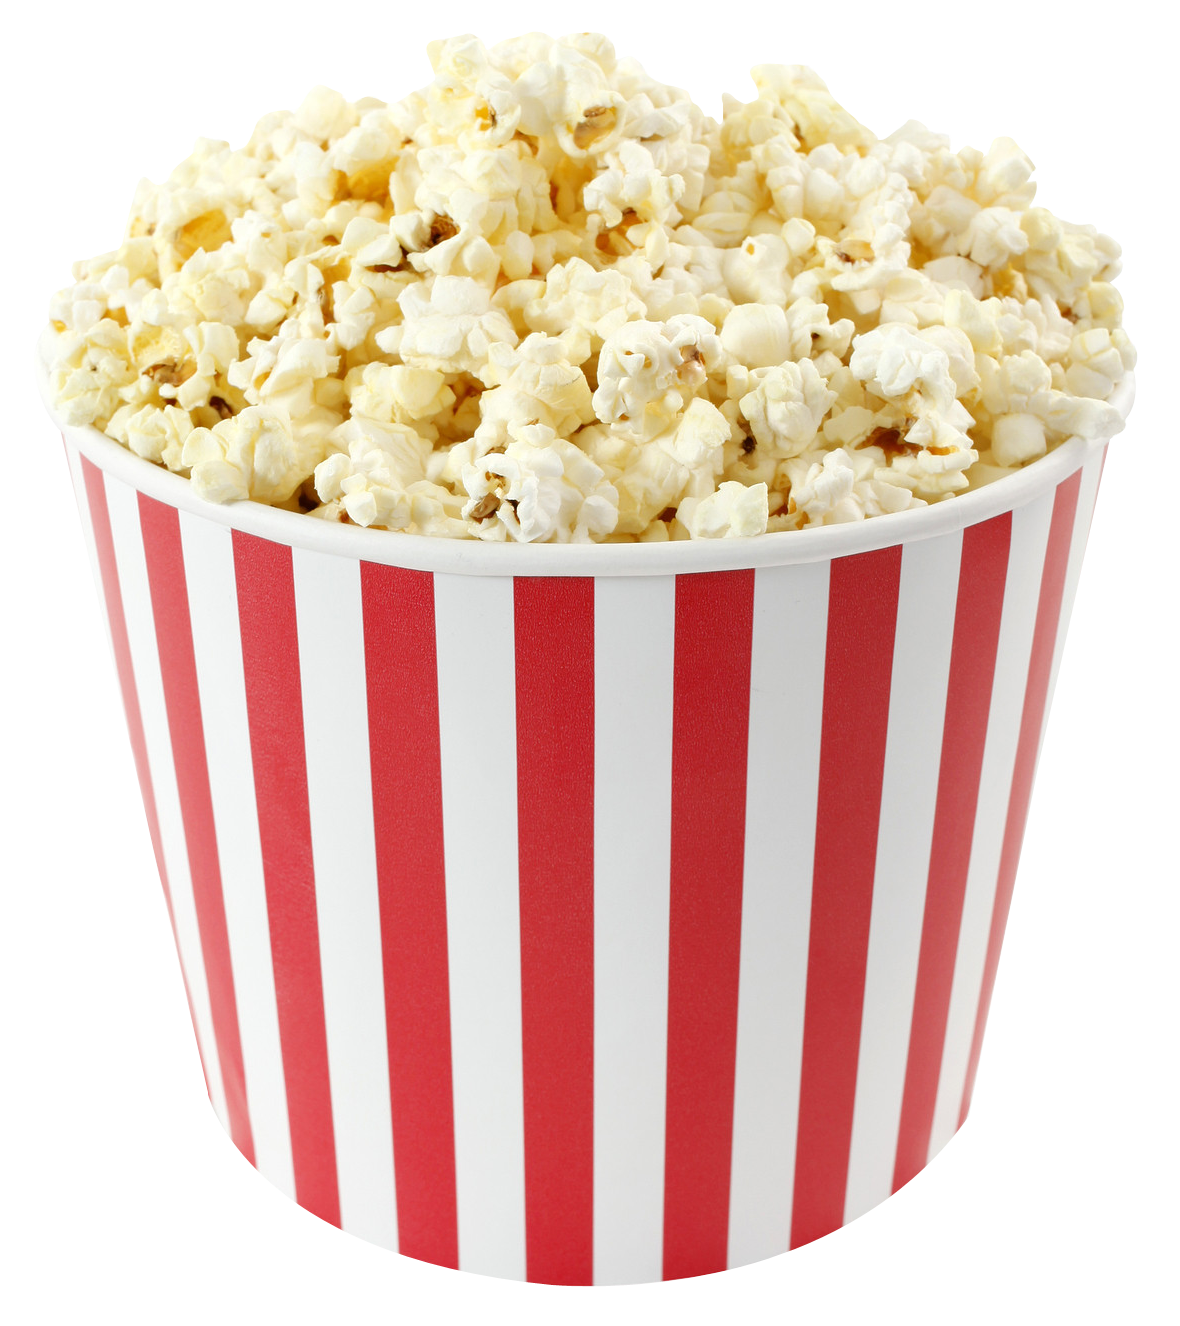 Classic Popcorn Bucket Full PNG image